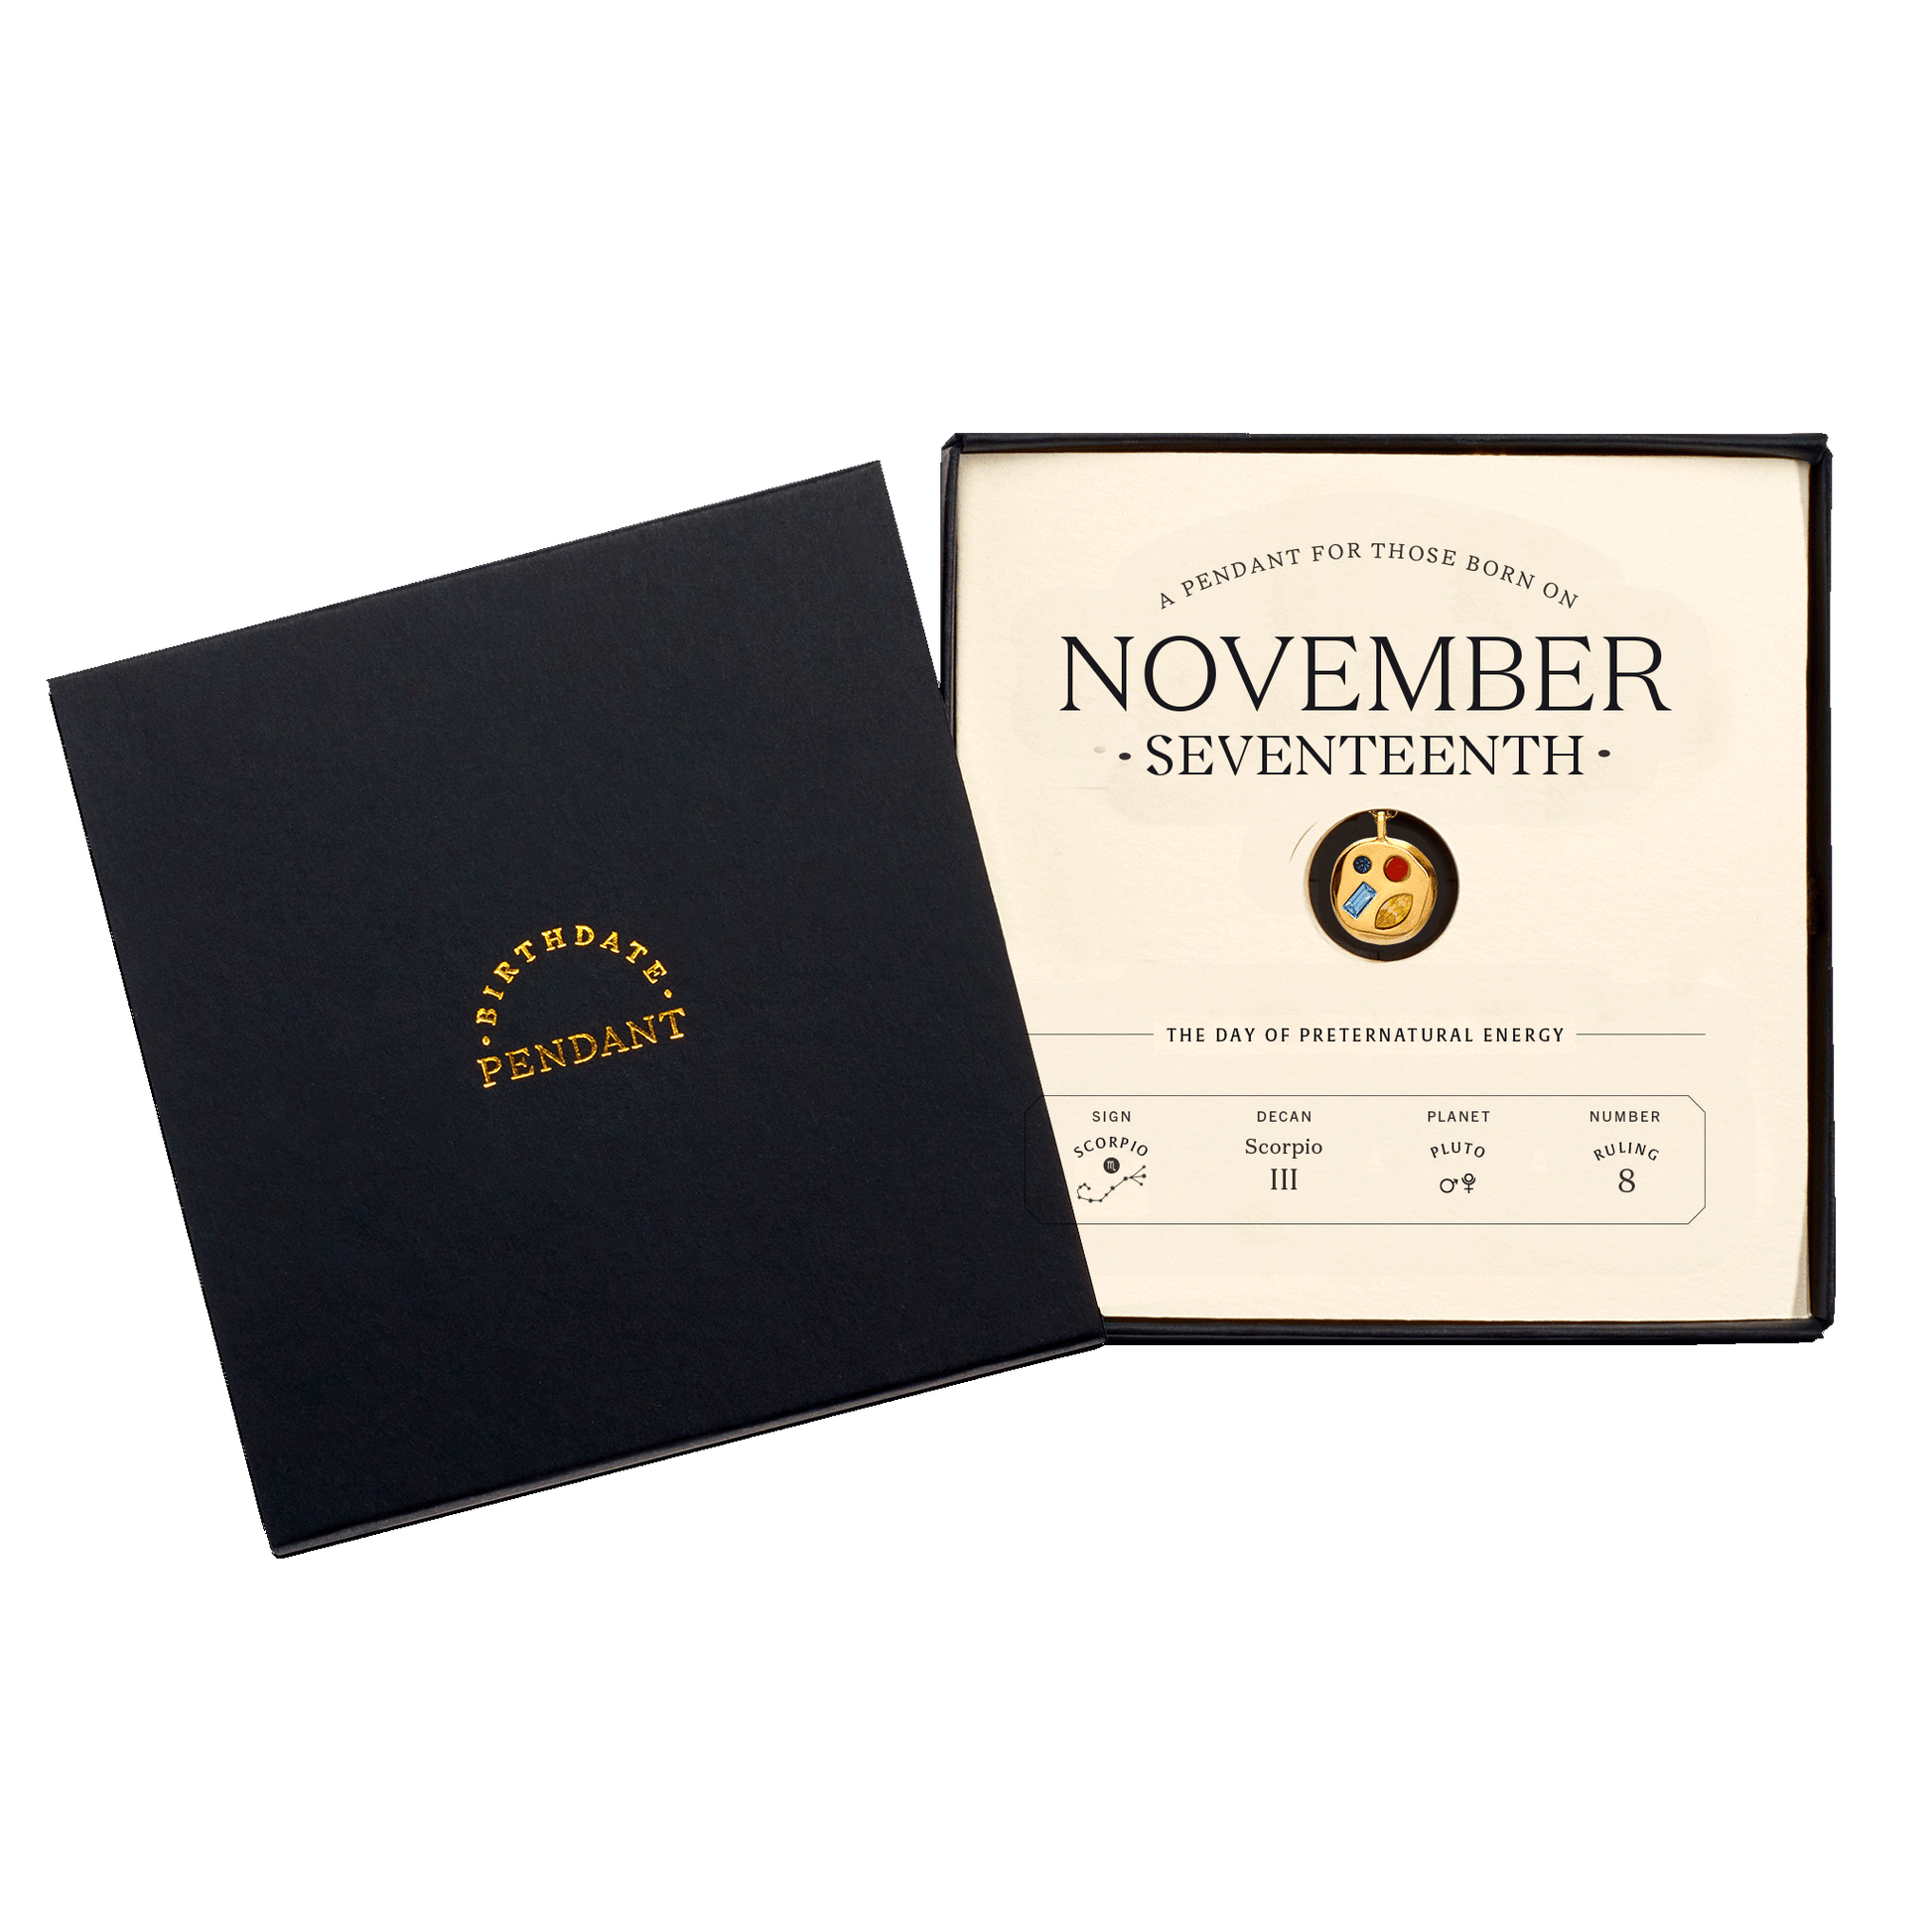 The November Seventeenth Pendant inside its box